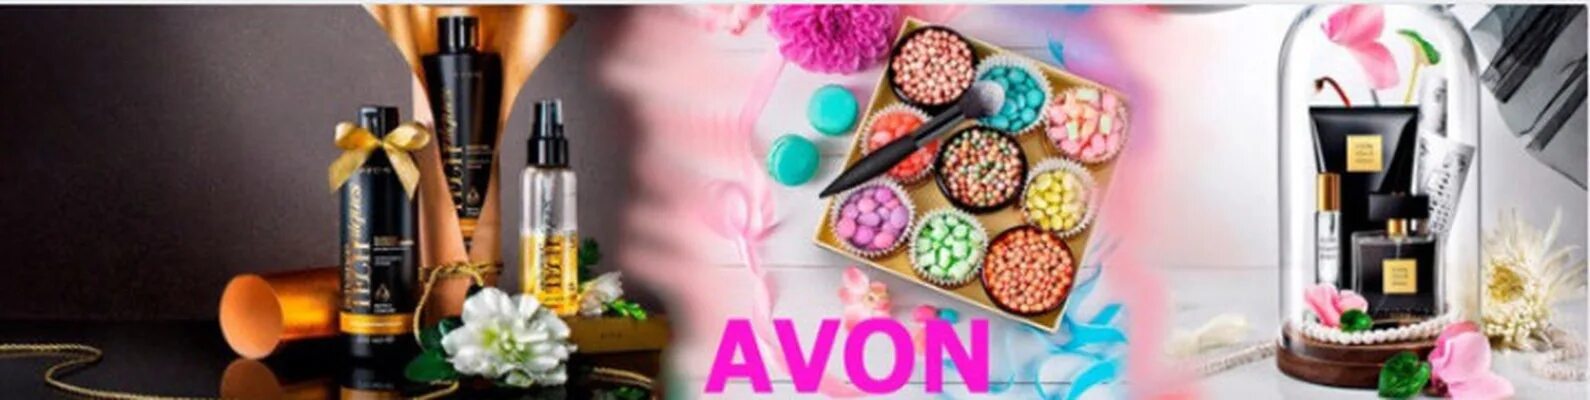 Avon bearing. Avon продукция. Косметика Avon. Обложка для сообщества Avon. Реклама косметики эйвон.